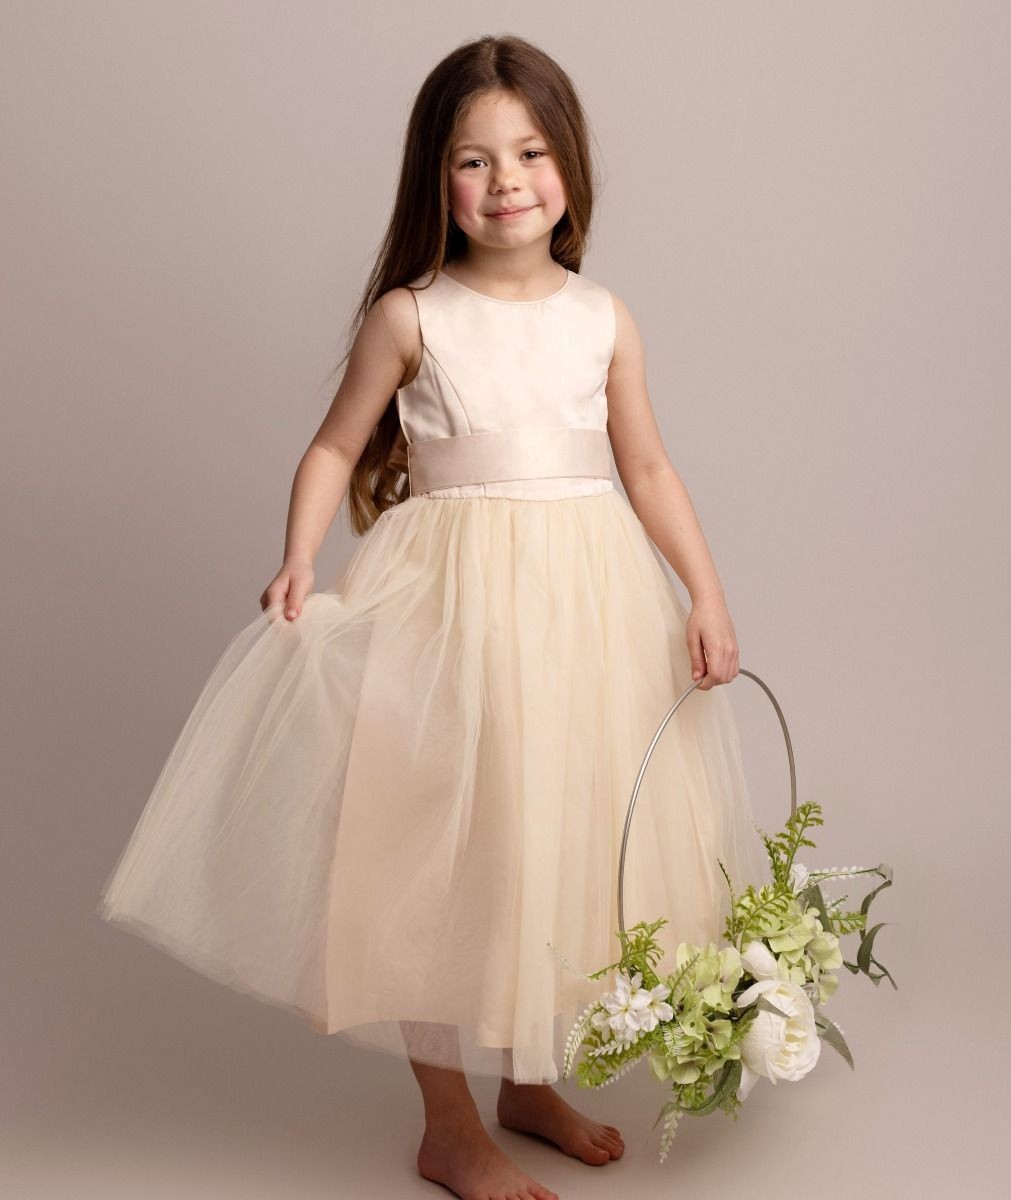 Flower Girl Dress with Tulle Skirt & Bow - HILARY - Champagne